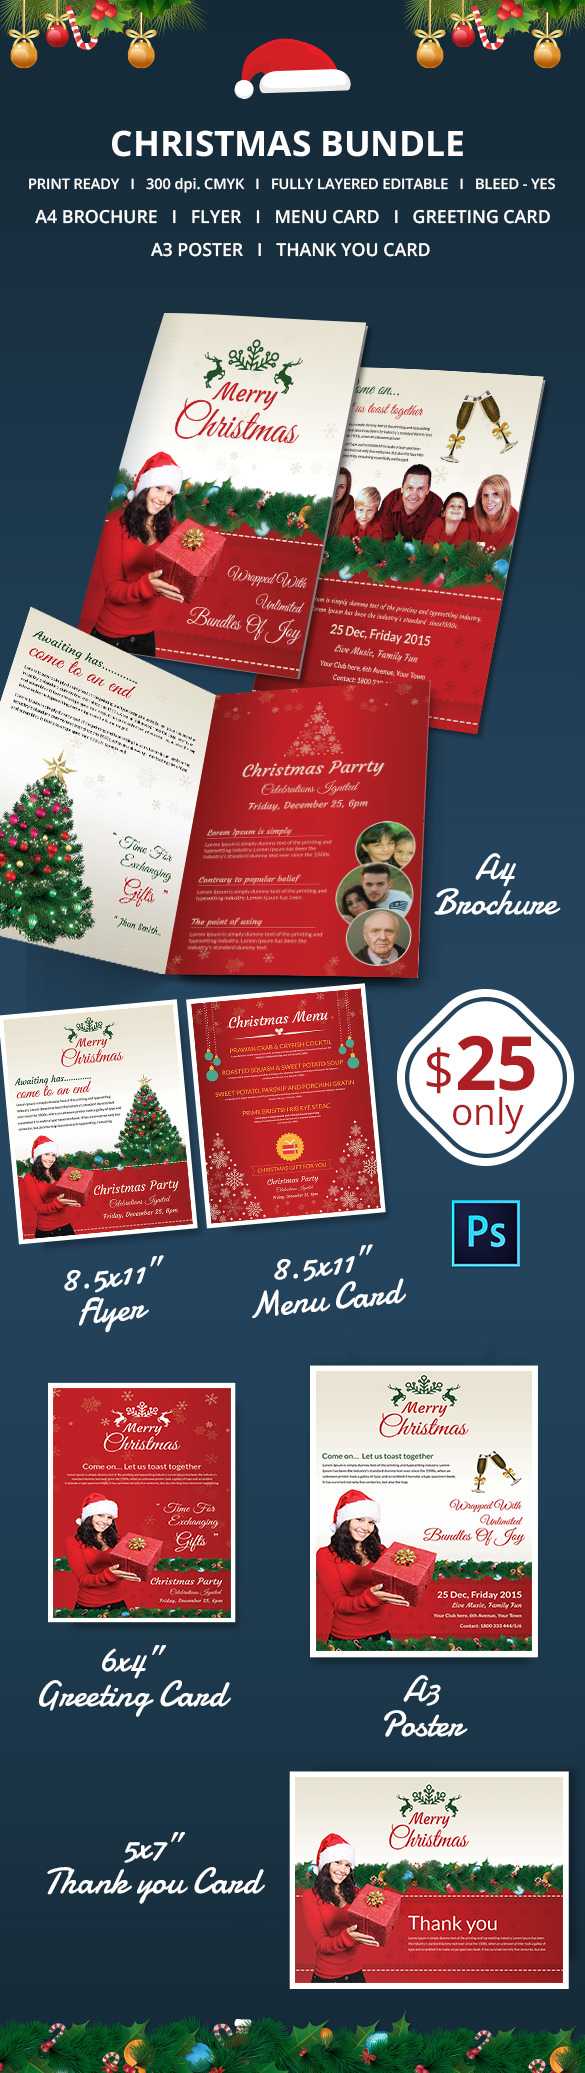 41+ Christmas Brochures Templates - Psd, Word, Publisher Within Christmas Brochure Templates Free